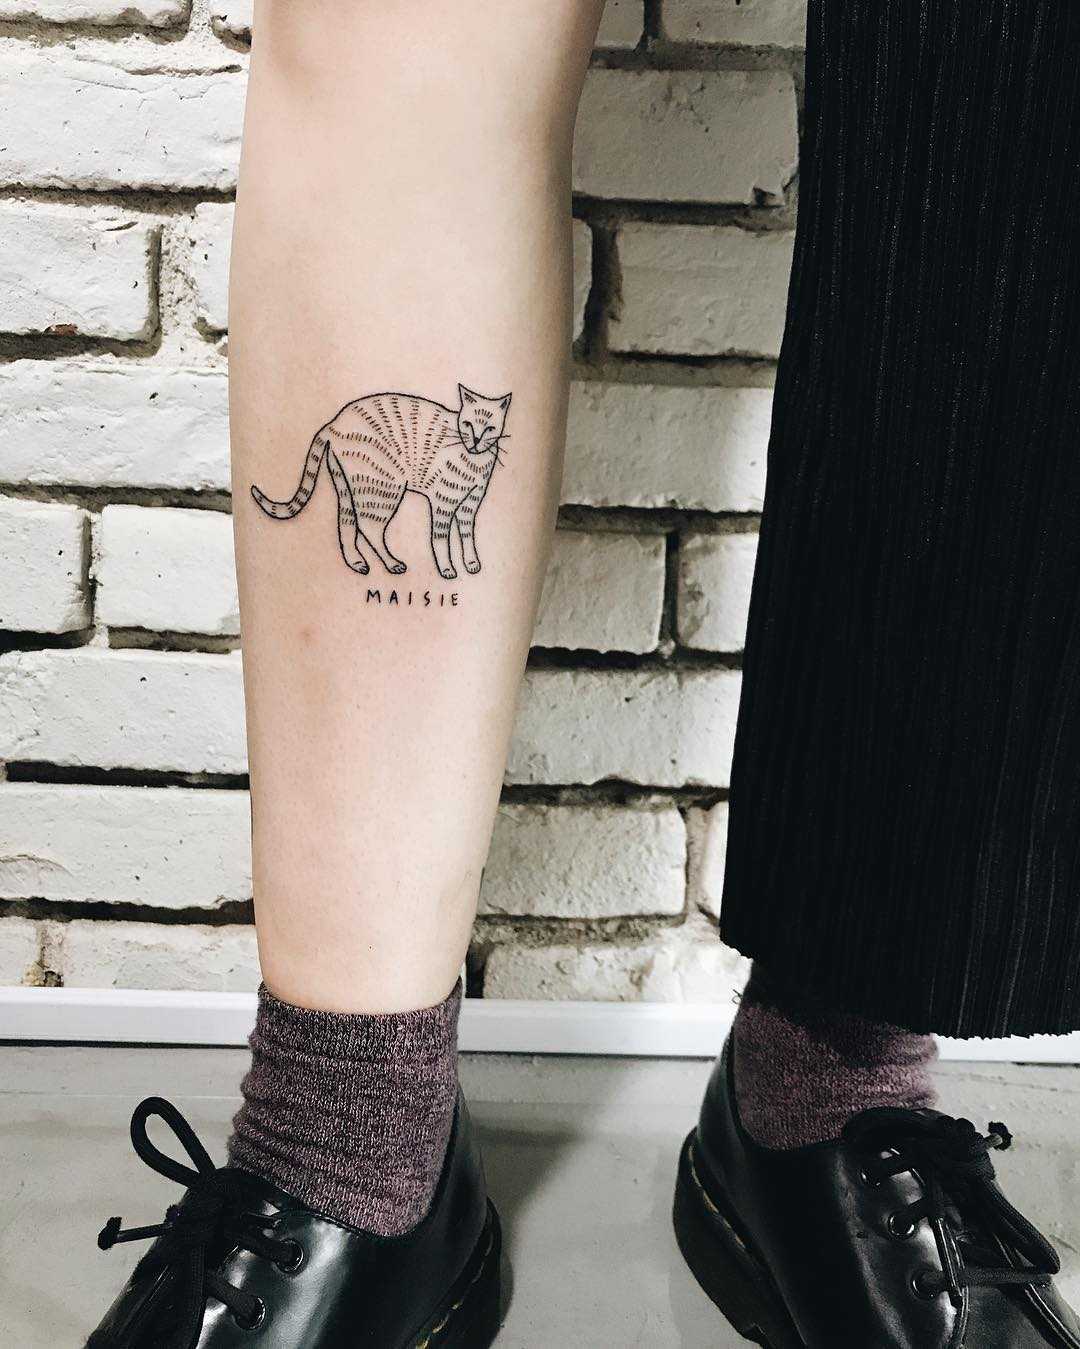 Maisie tattoo by Kelli Kikcio